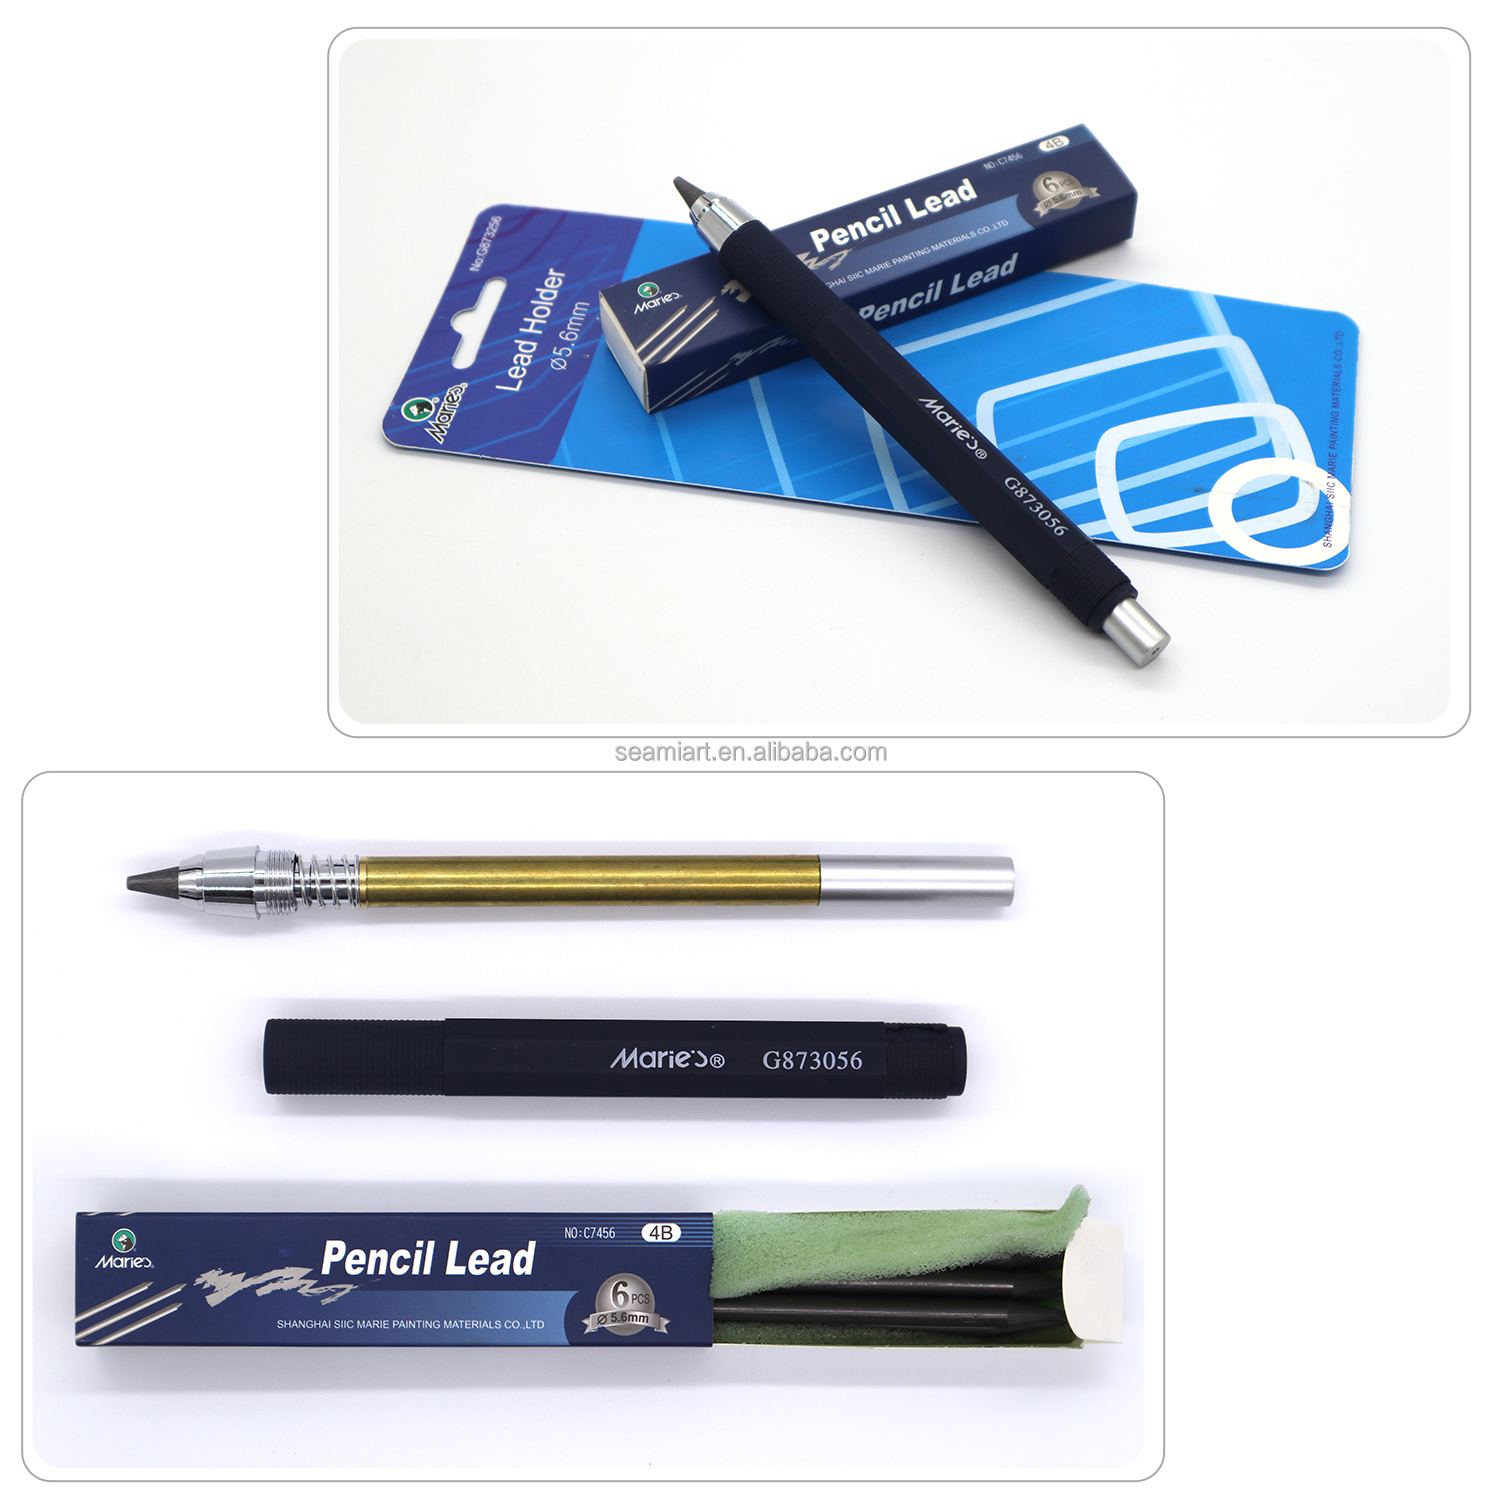 1PC 5.6mm Automatic Pencil Set 4B Lead for mechanical Pencil Sketch Drawing Pencil Artist Art Supplies1